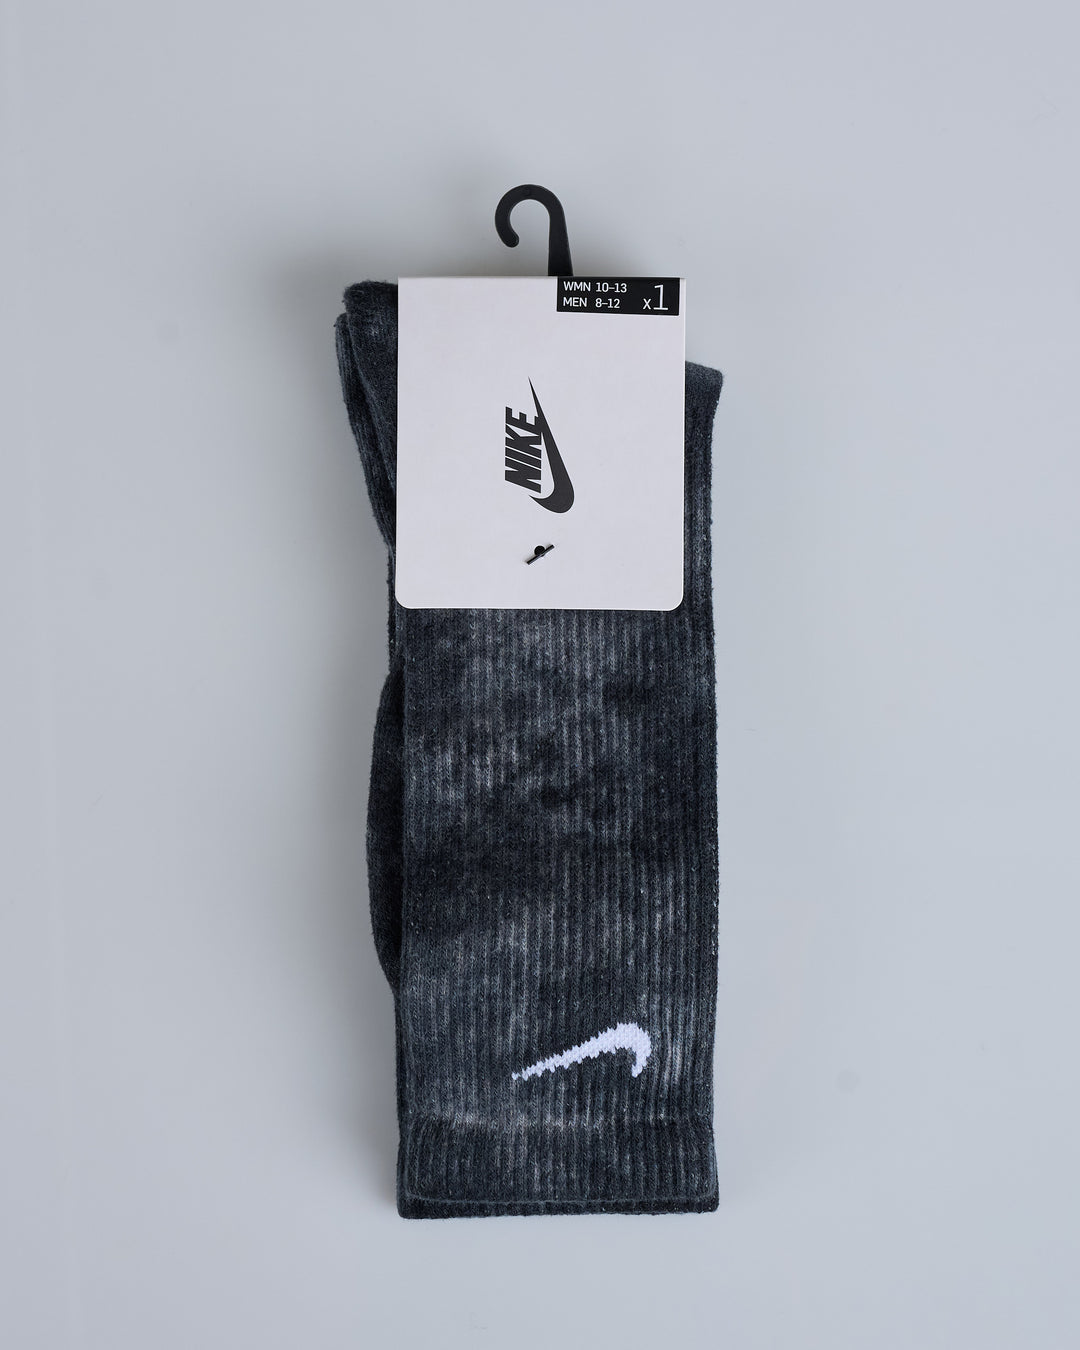 Nike Men's Everyday Plus Sock Black/Lt Smoke Grey/White